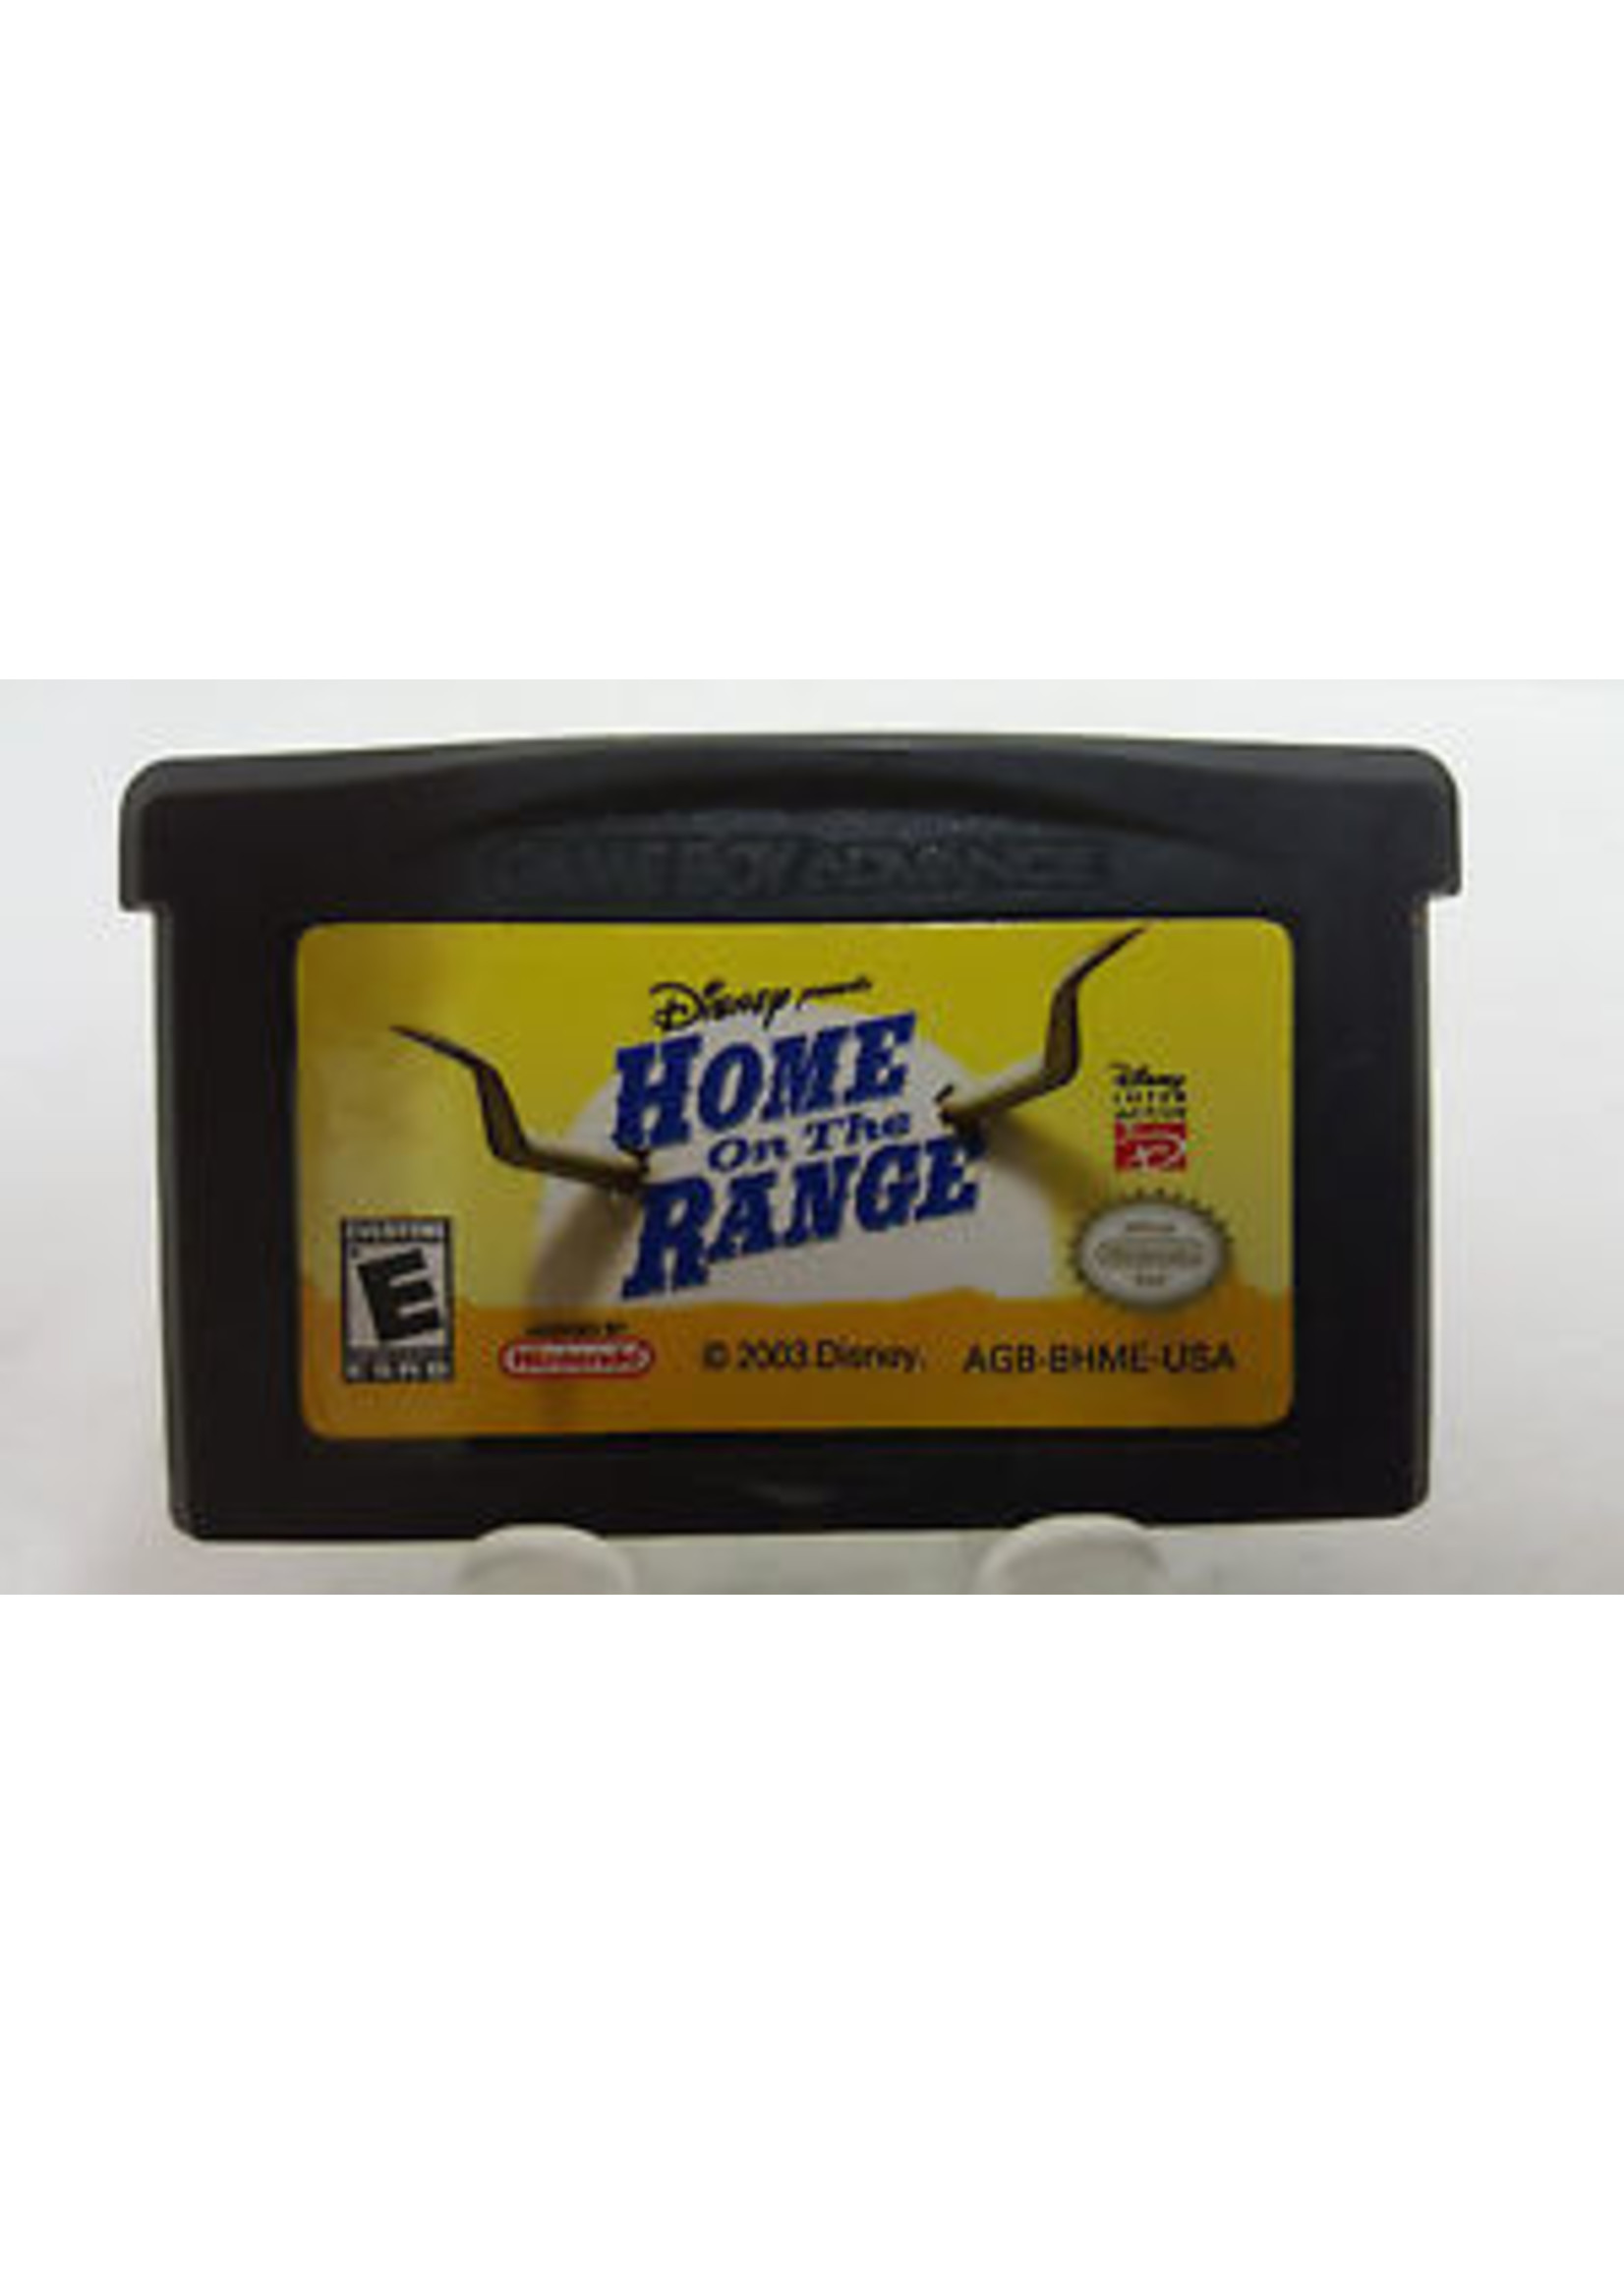 Nintendo Gameboy Advance Home on the Range